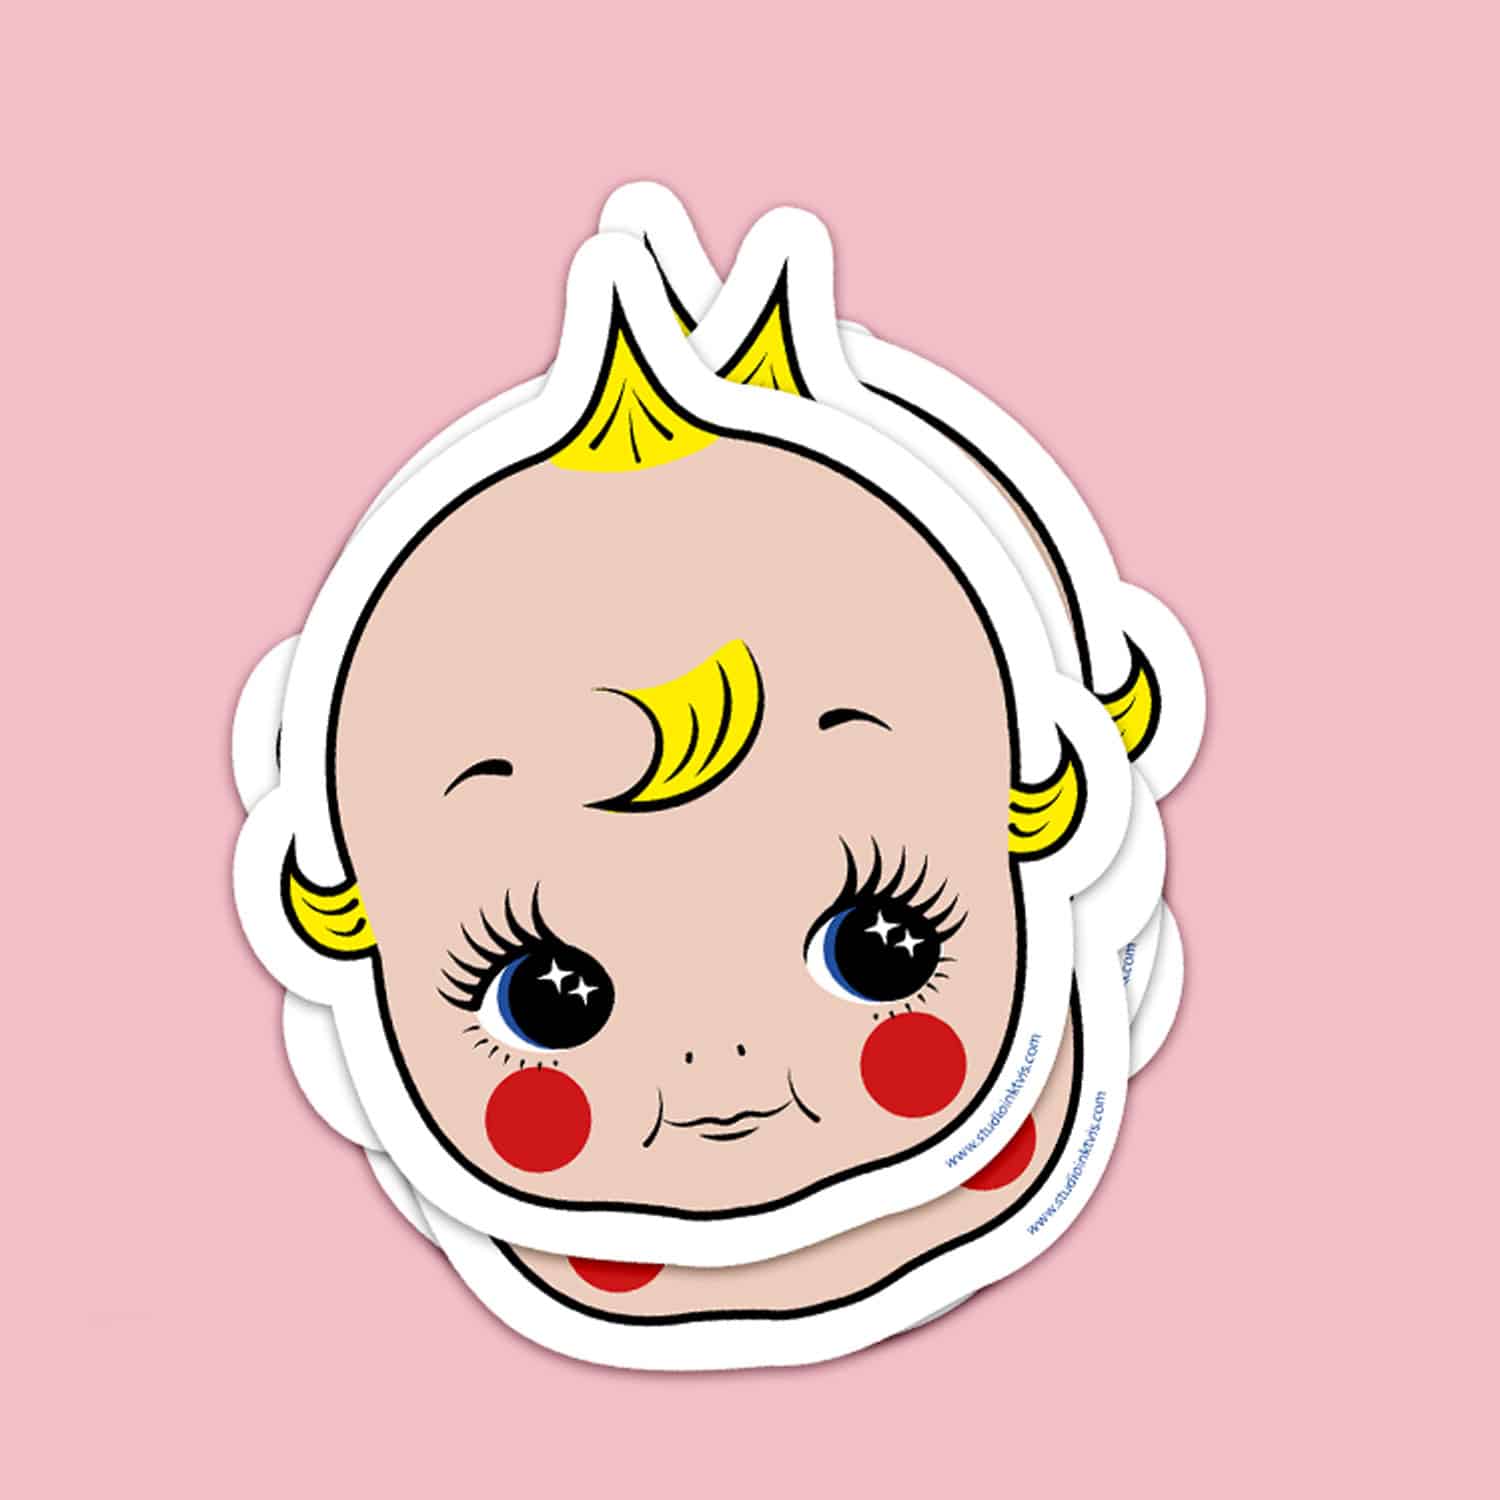 Sticker Kewpie baby